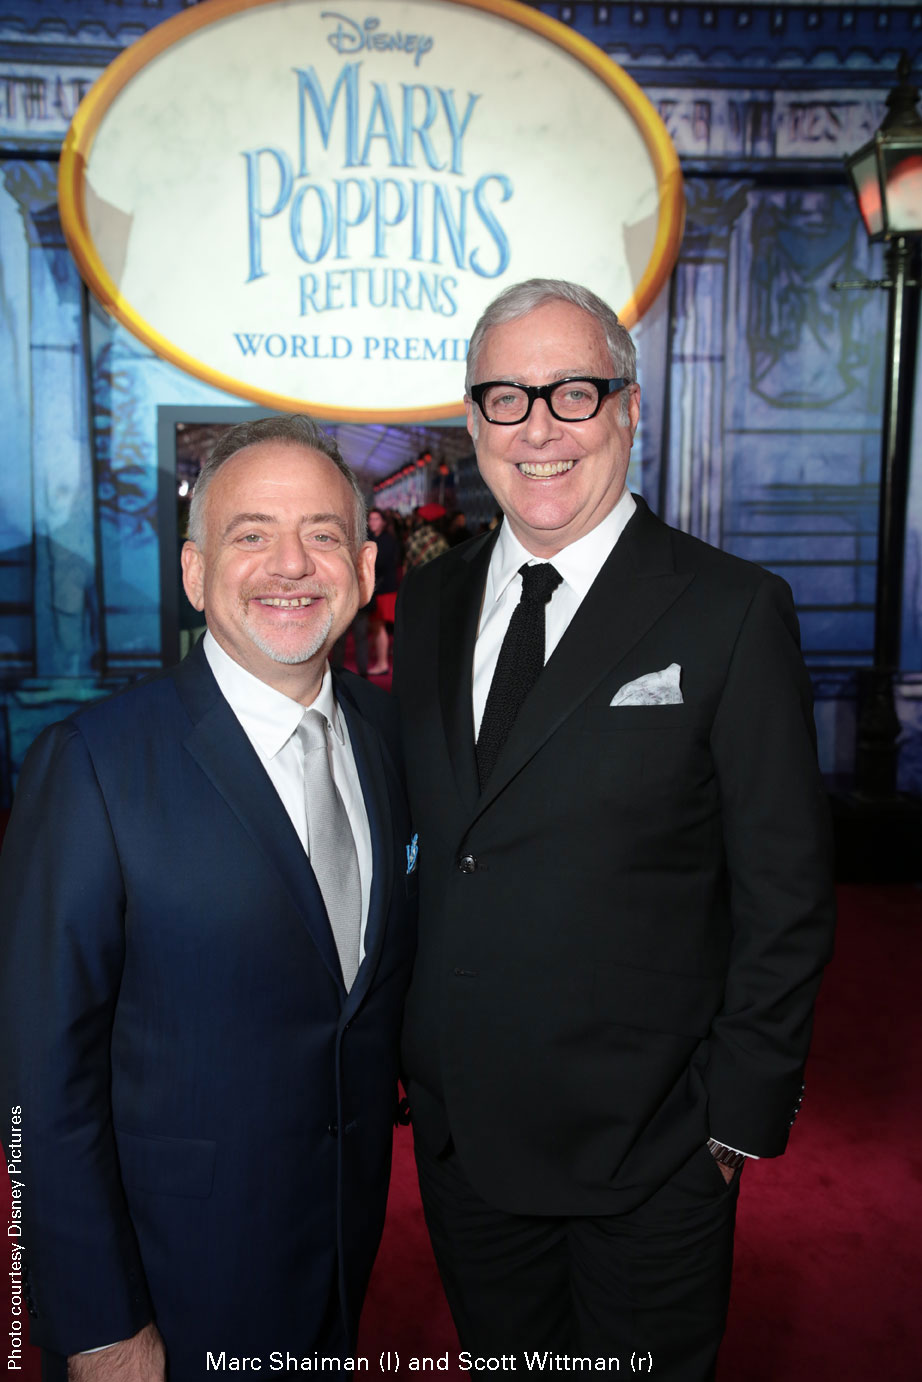 Marc Shaiman (l) and Scott Wittman (r) at Mary Poppins Returns premiere